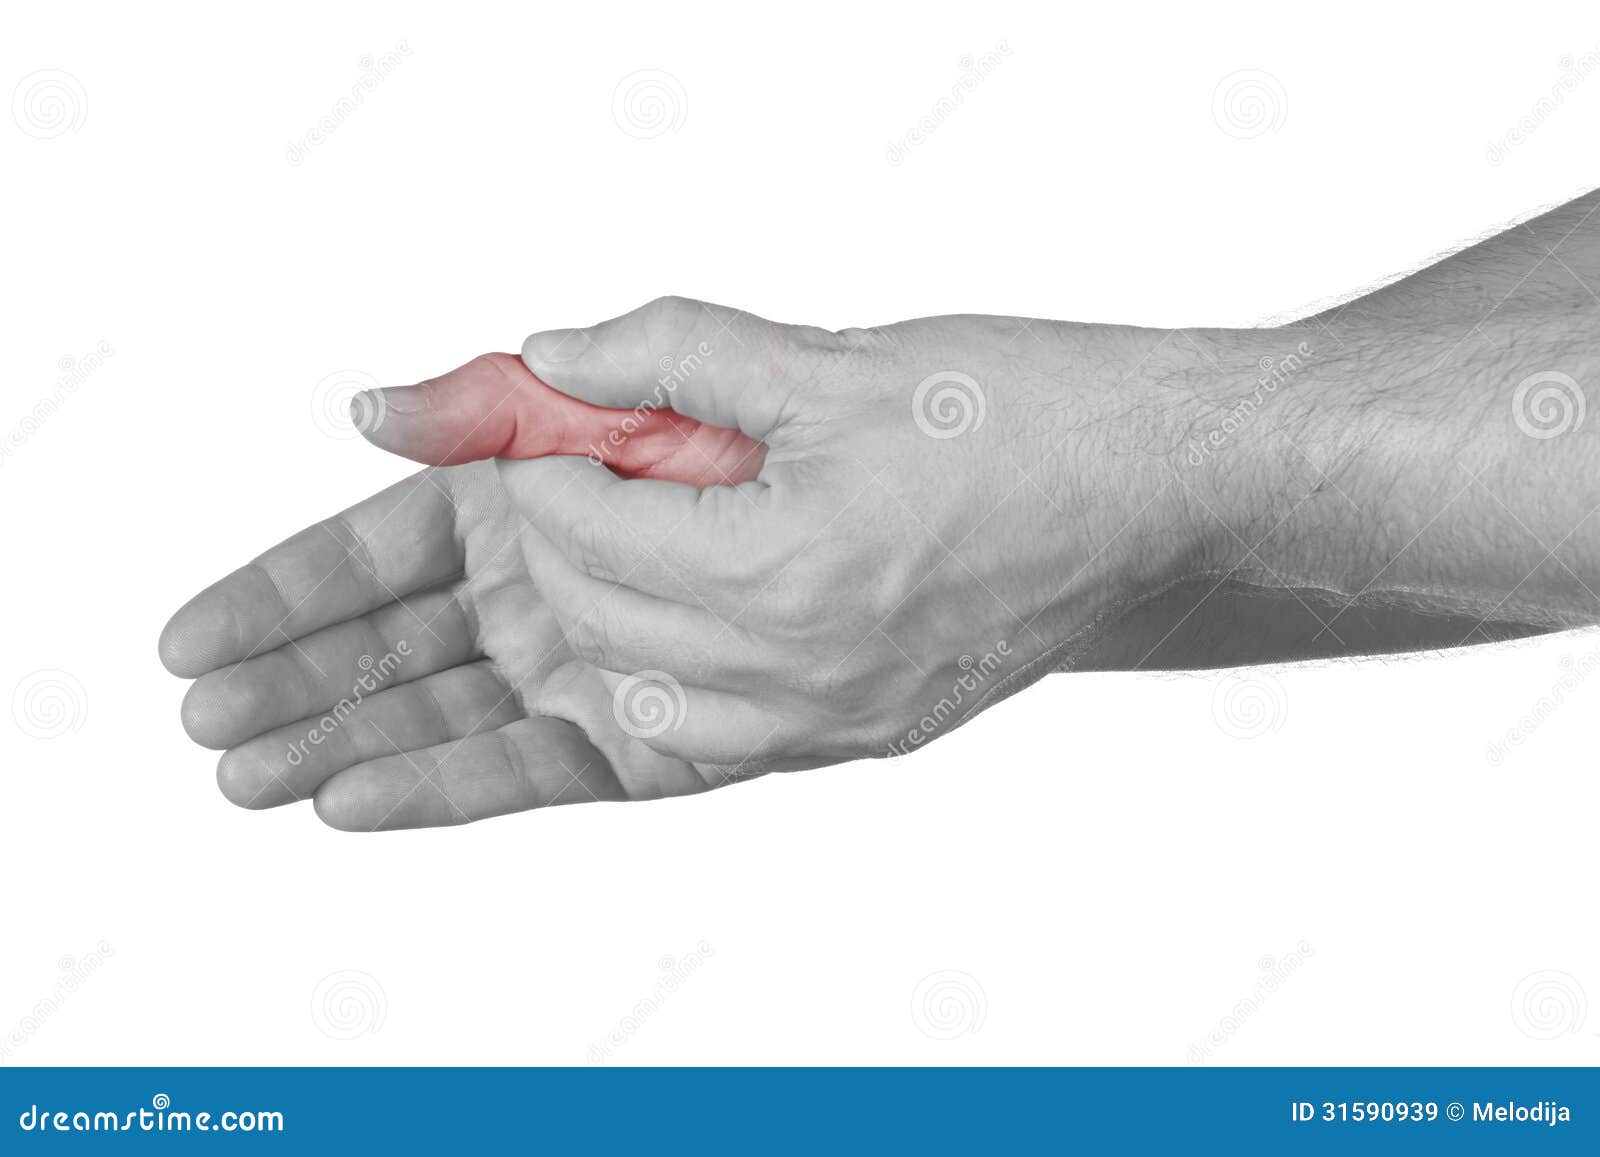 Сустав большого пальца руки. Боль в суставе большого пальца руки. Болит сустав большого пальца на руке. Болит сустав Болшево пальца на руке.